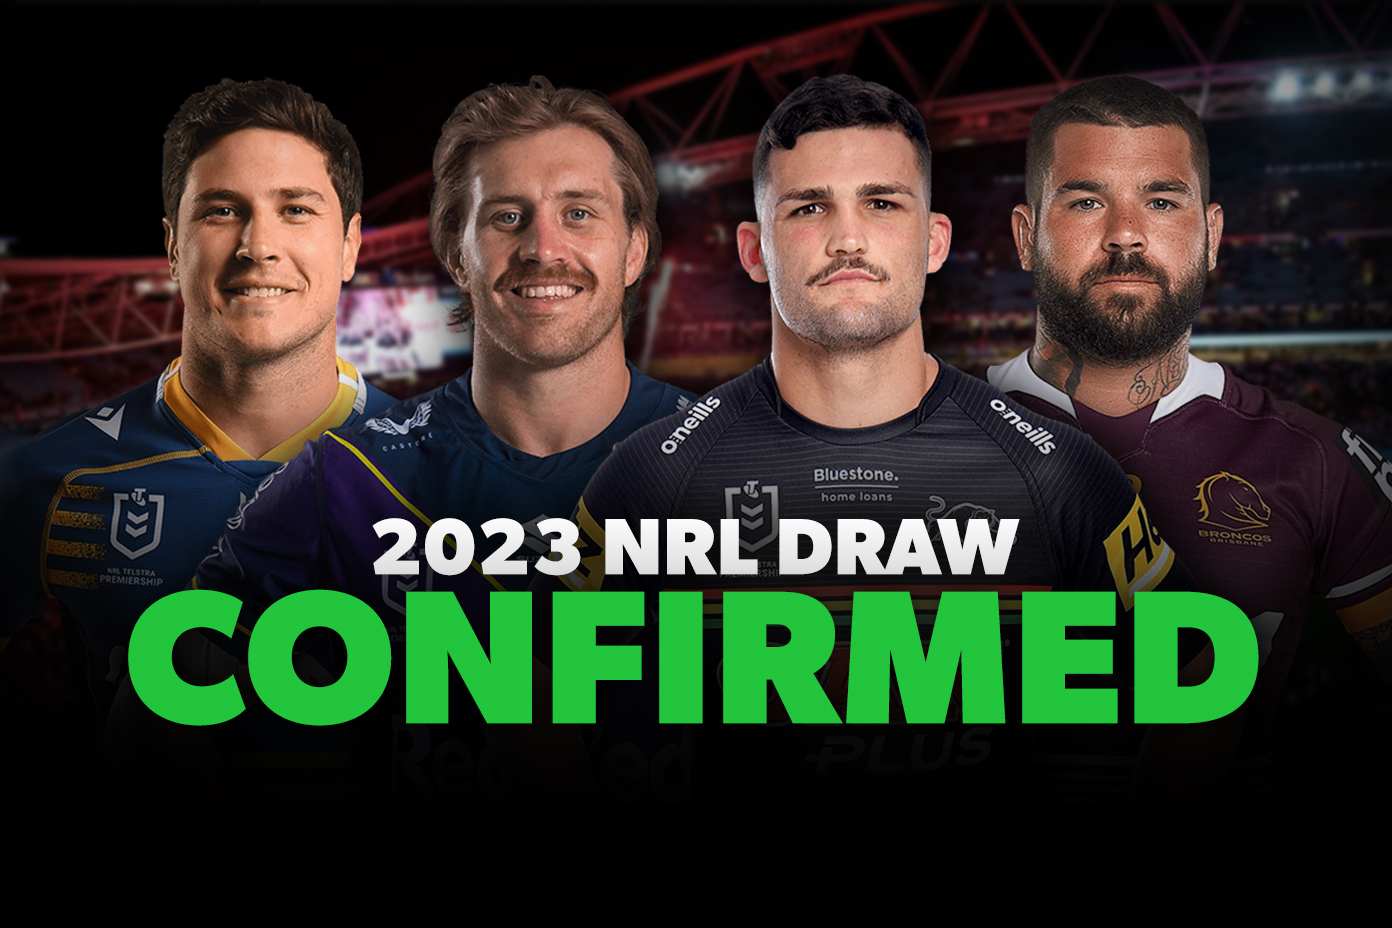 Each team's 2023 NRL draw at a glance